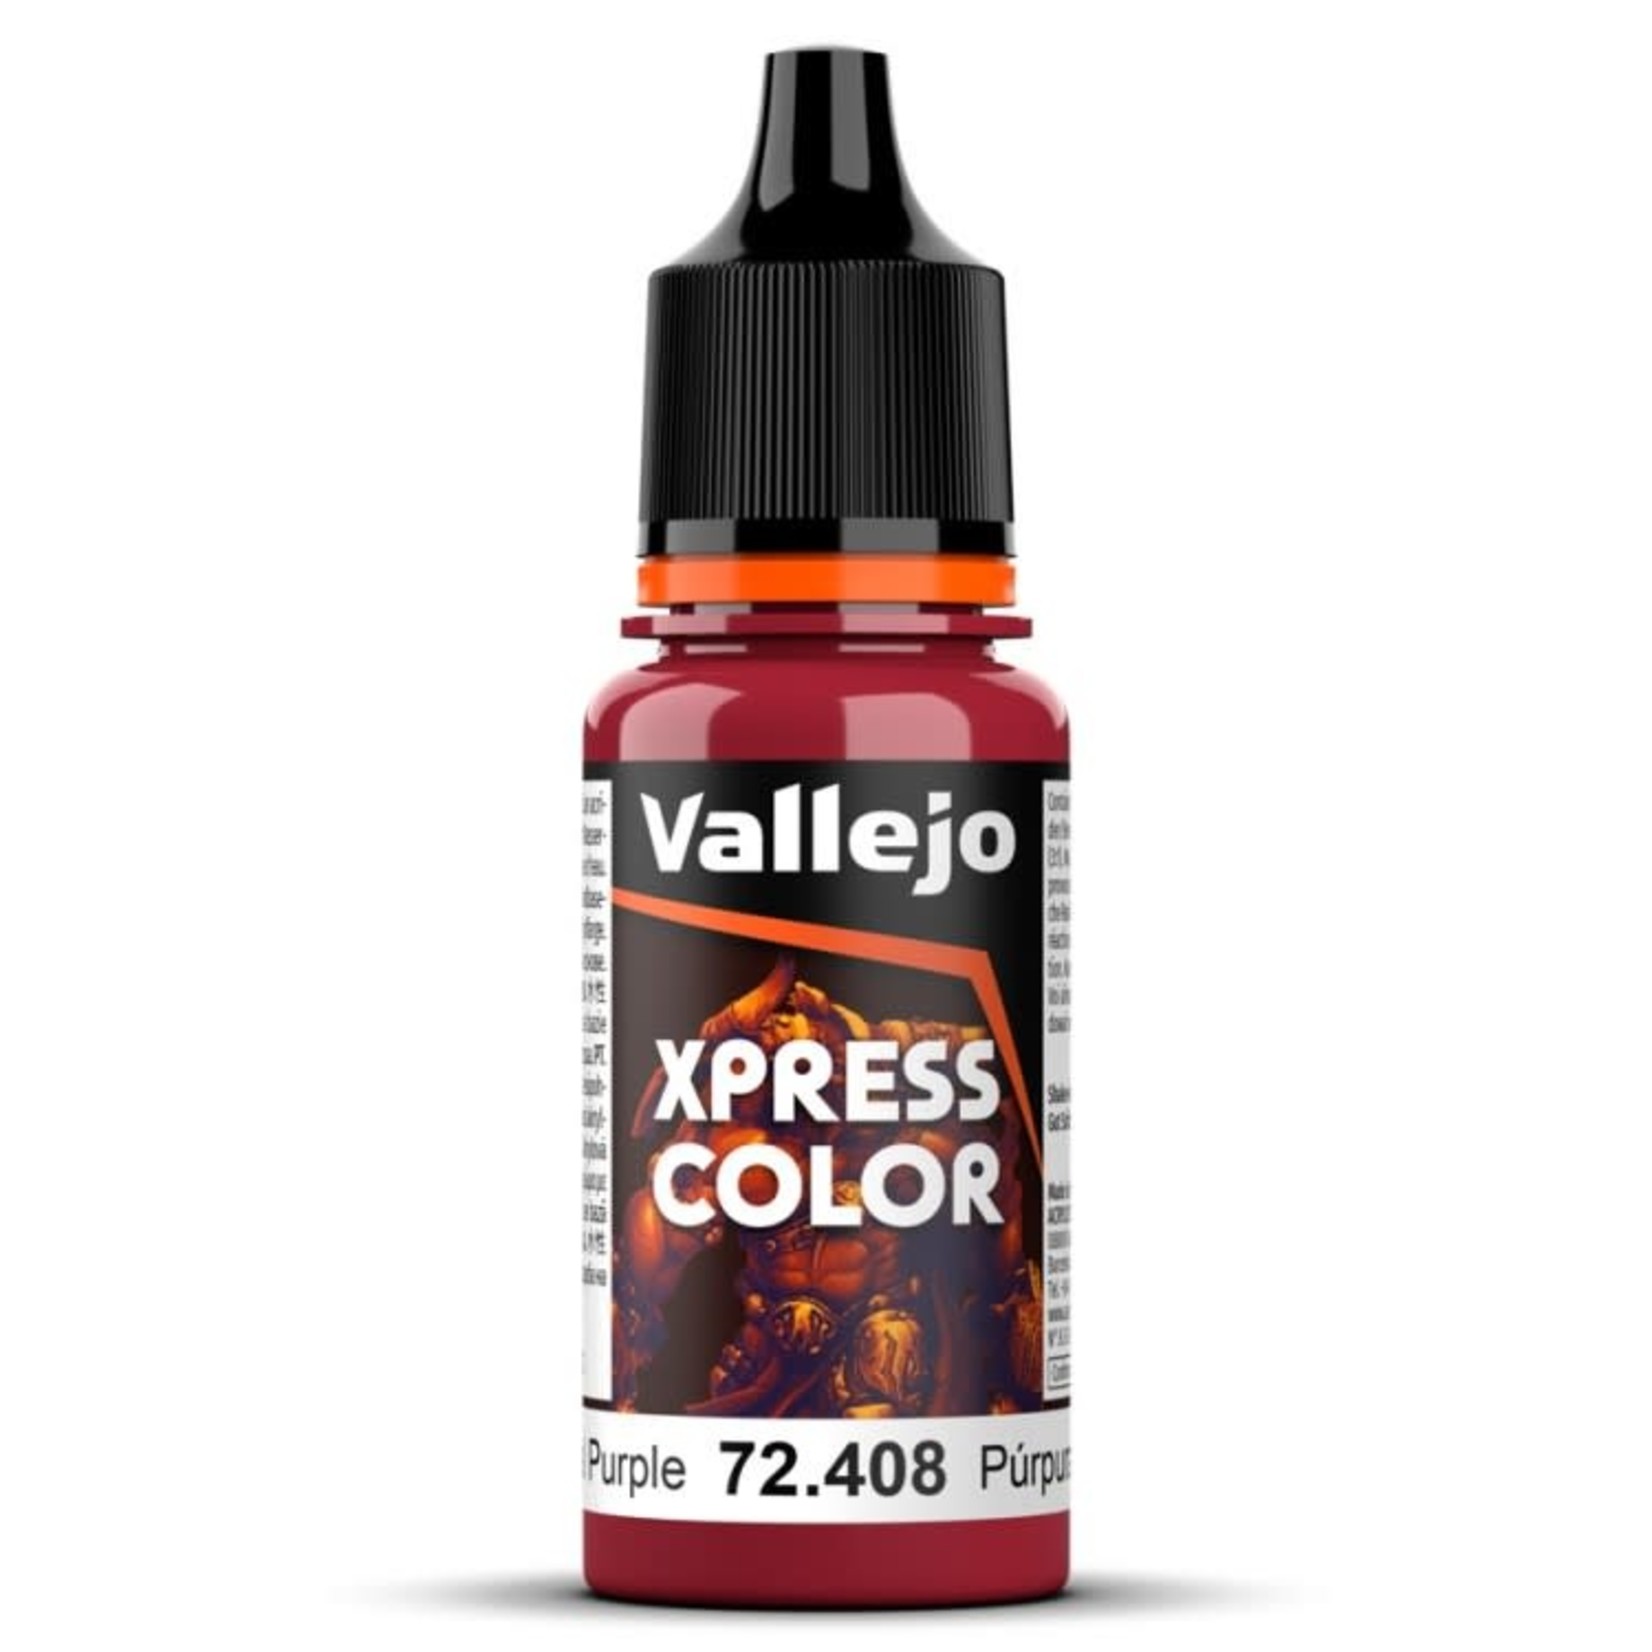 Vallejo Paint: Xpress (Cardinal Purple)